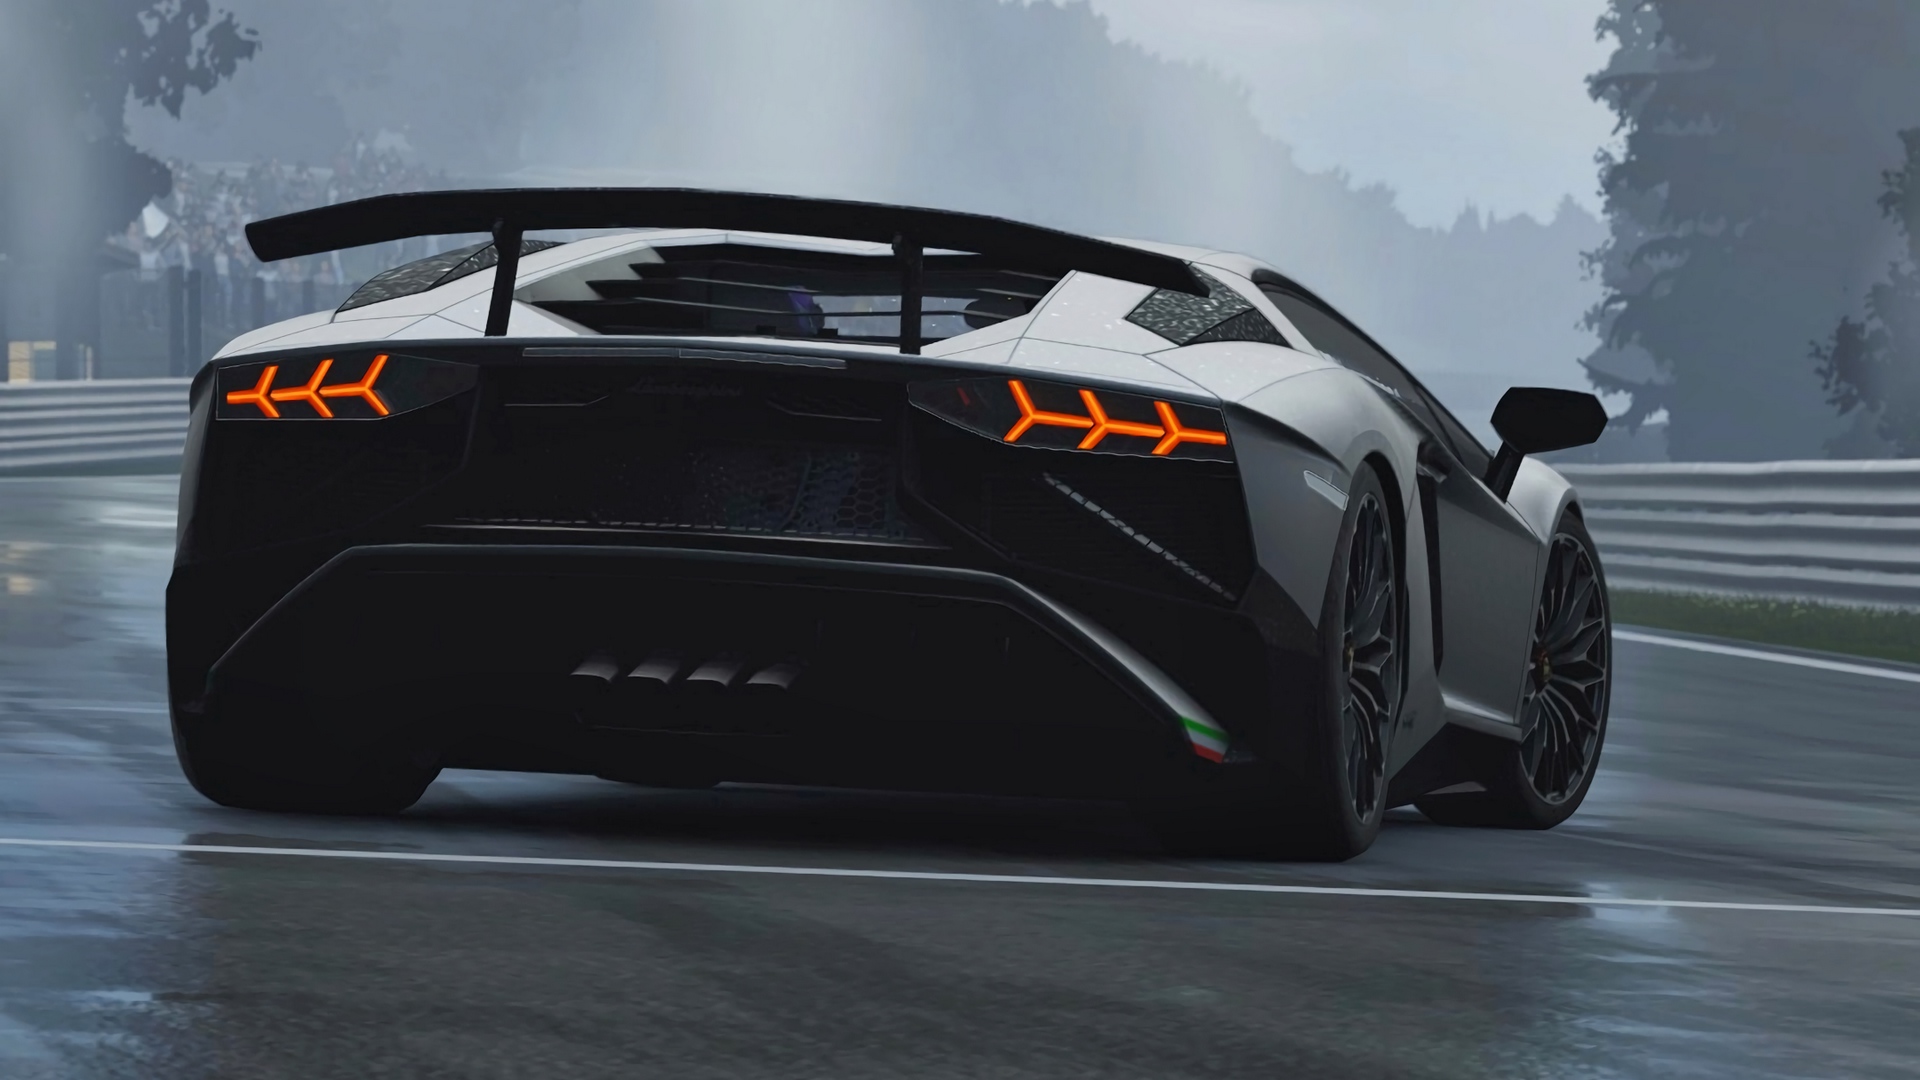 General 1920x1080 Lamborghini sports car car supercars black cars vehicle Forza Horizon video games Turn 10 Studios rear view